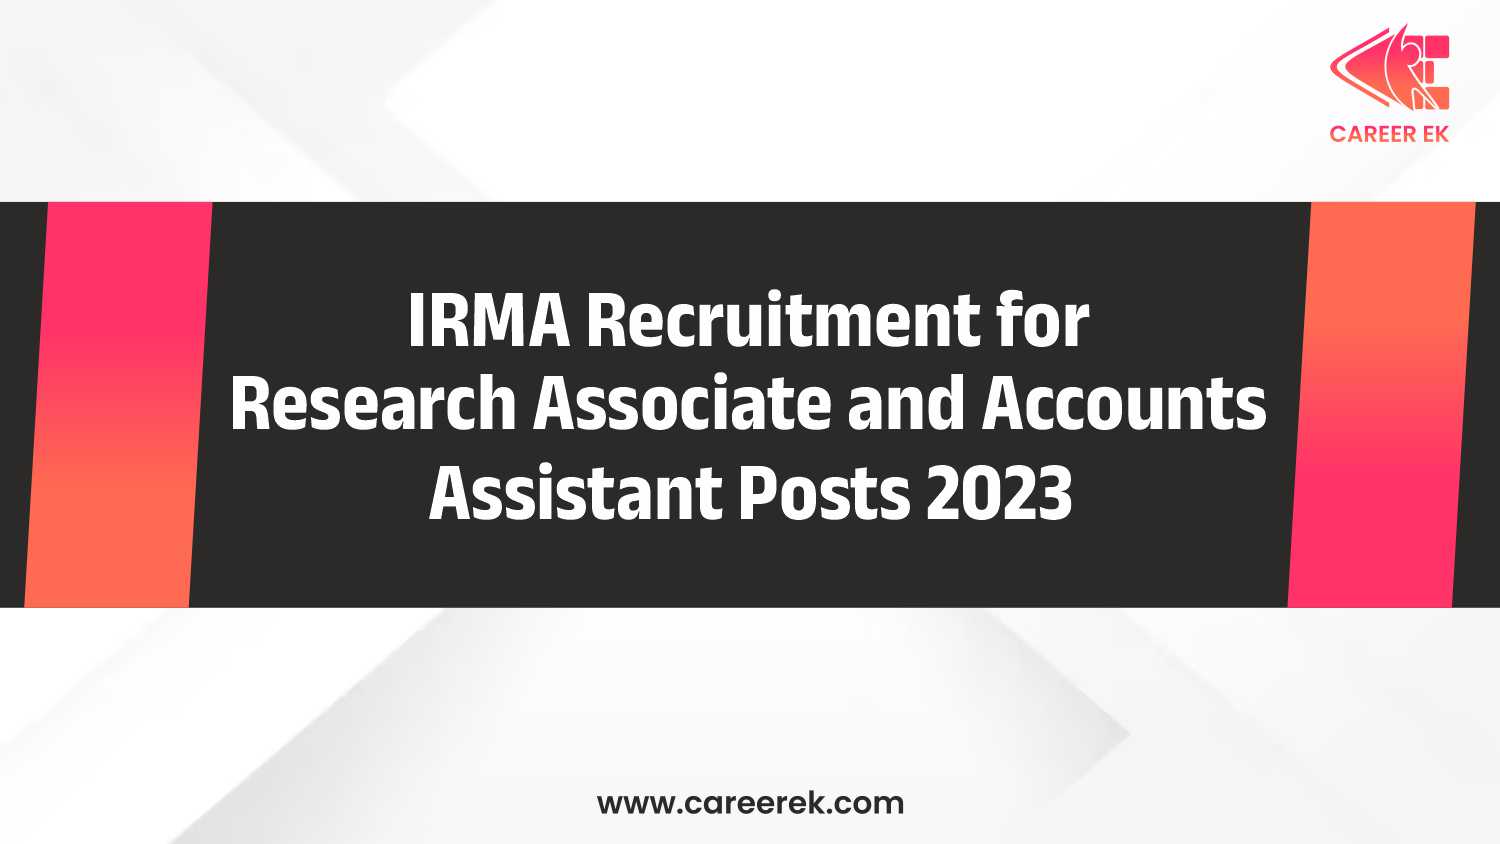 IRMA Recruitment 2023